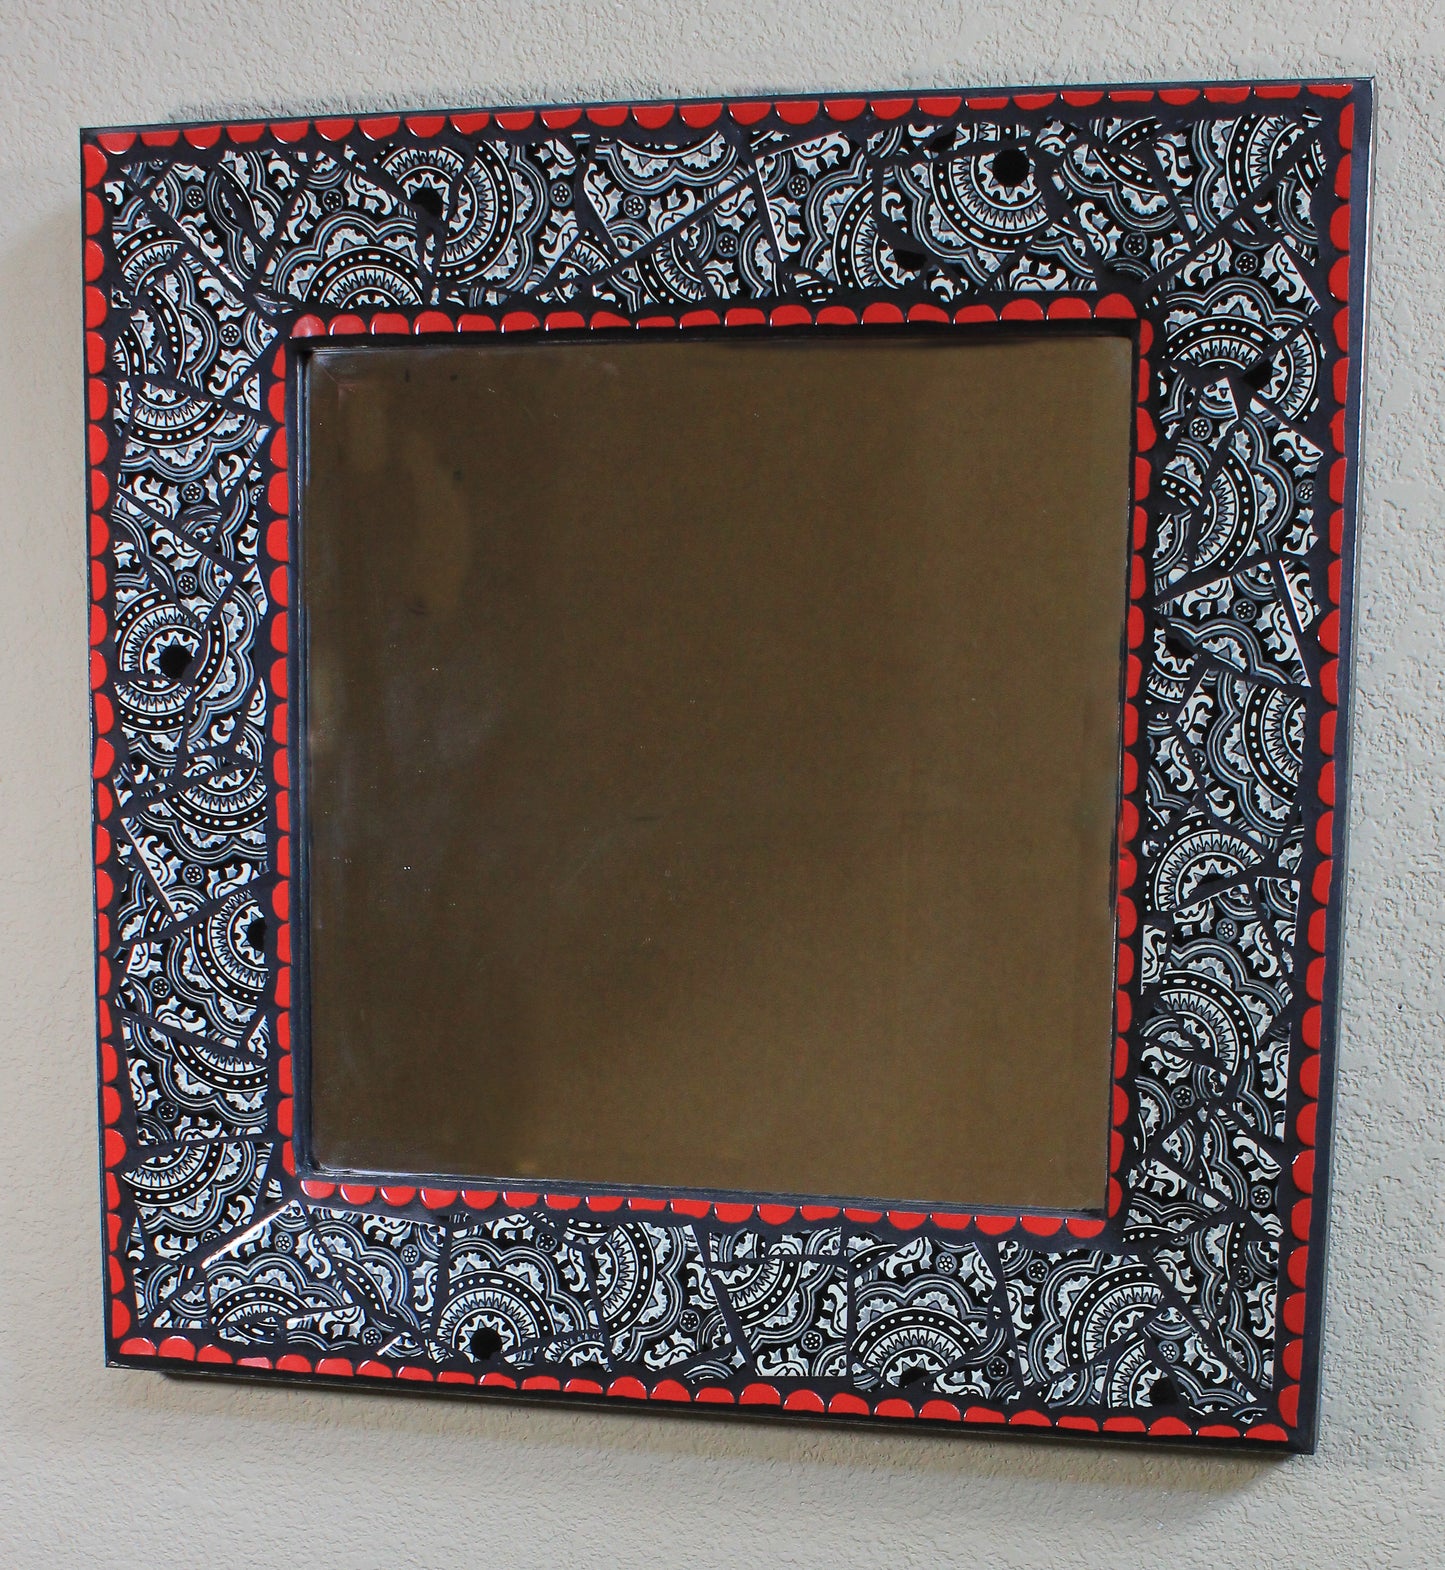 Black, White & Red Spanish Tile Mosaic Mirror